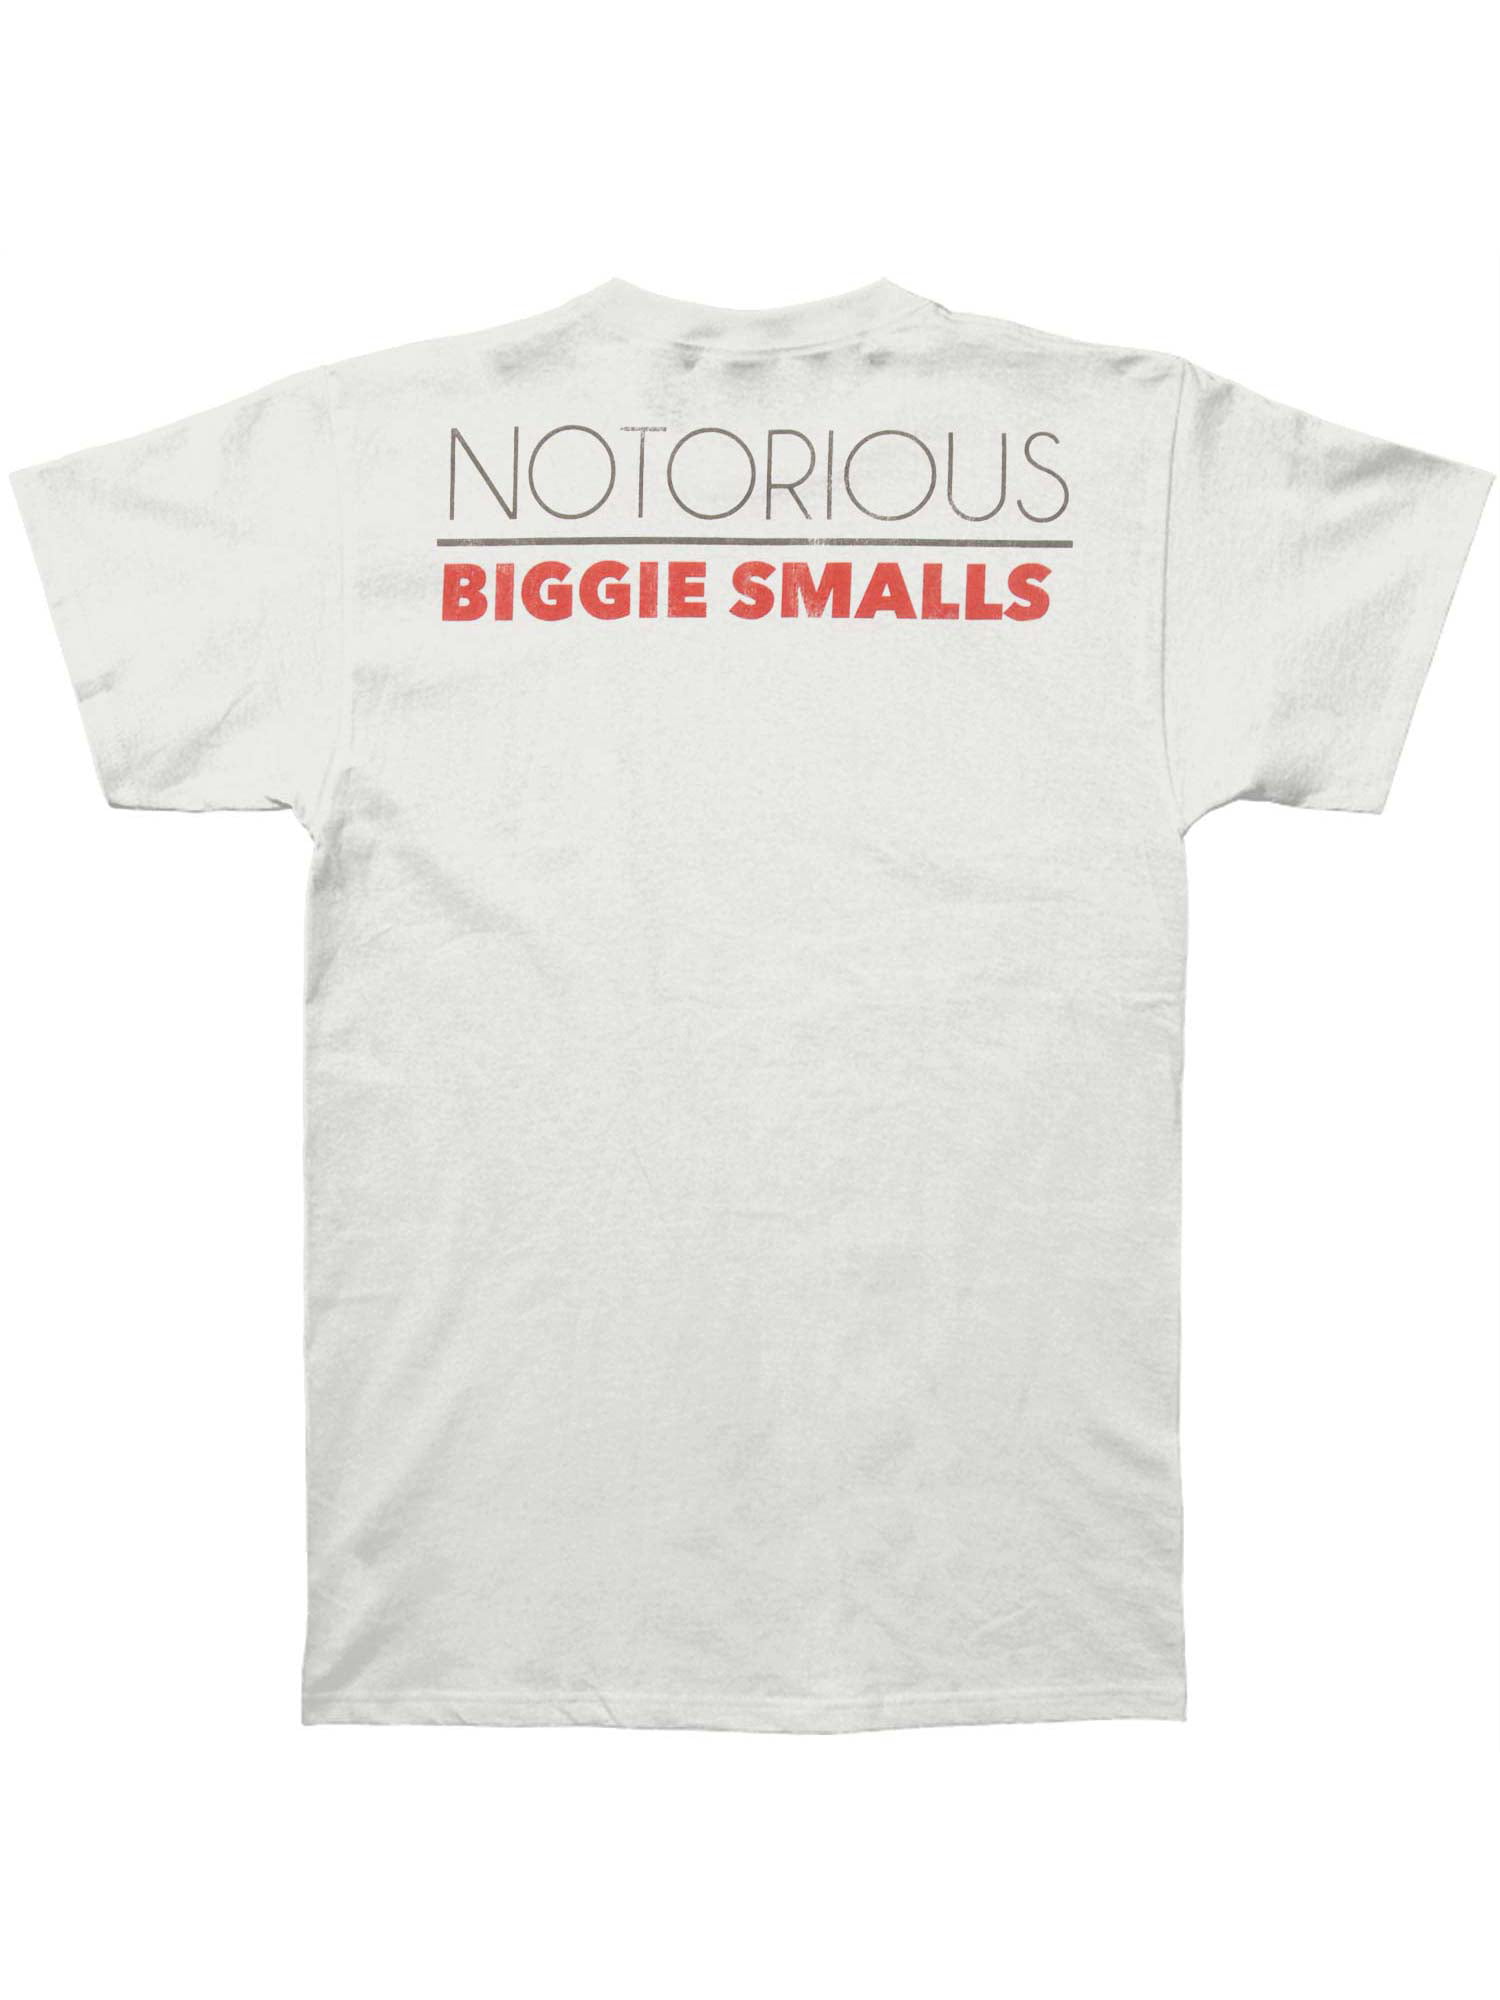 Supreme Biggie Smalls Notorious BIG Tee Shirt Size M 100% Authentic White